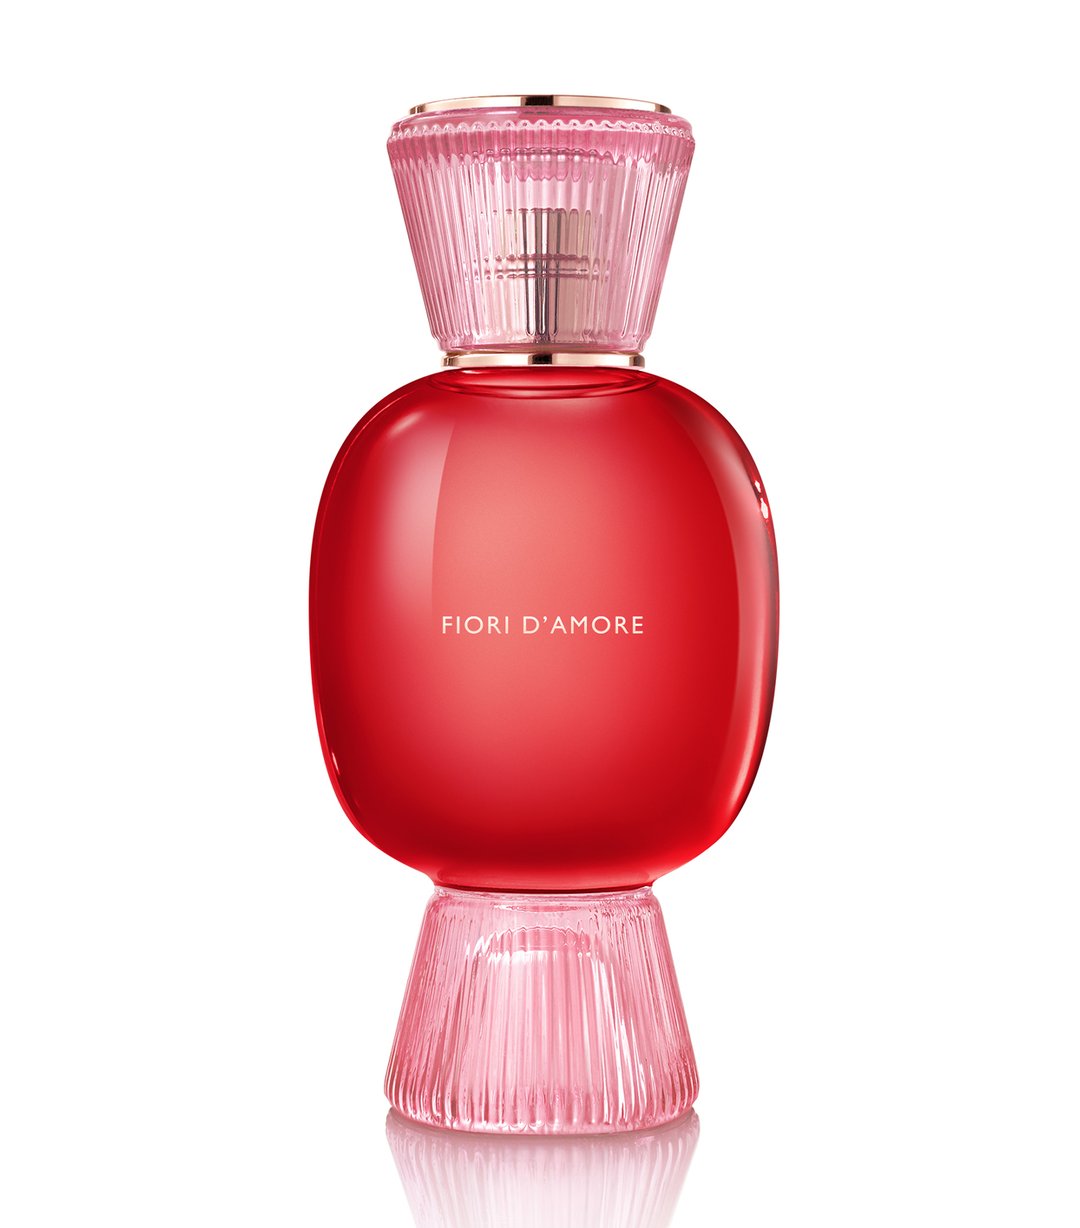 Allegra Fiori D'amore – Boujee Perfumes